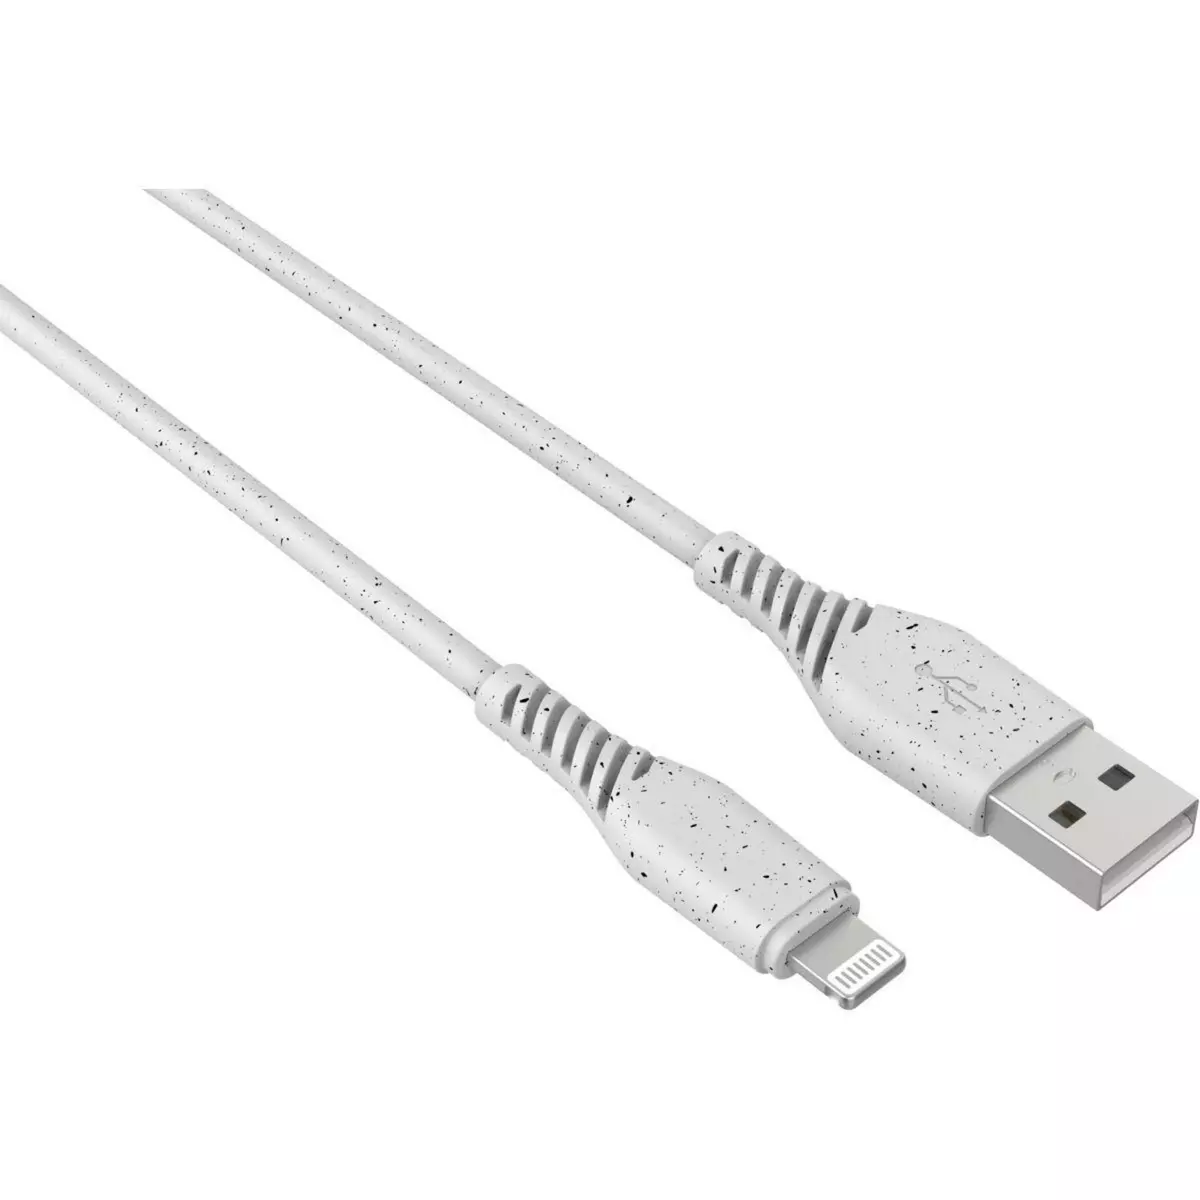 ADEQWAT Câble Lightning vers USB 2m blanc eco design